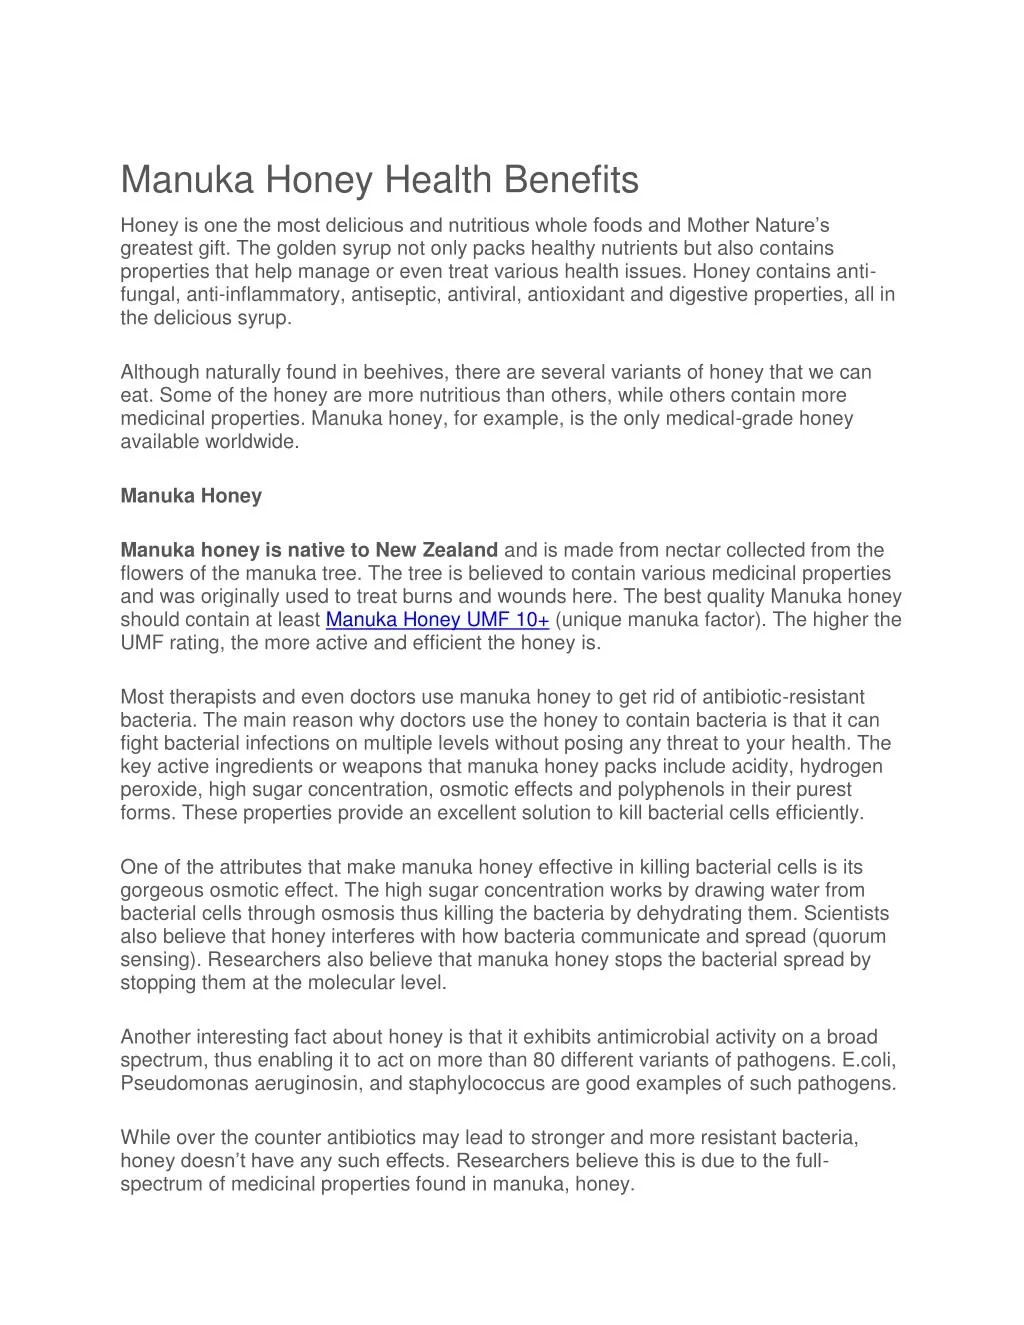 manuka honey health benefits